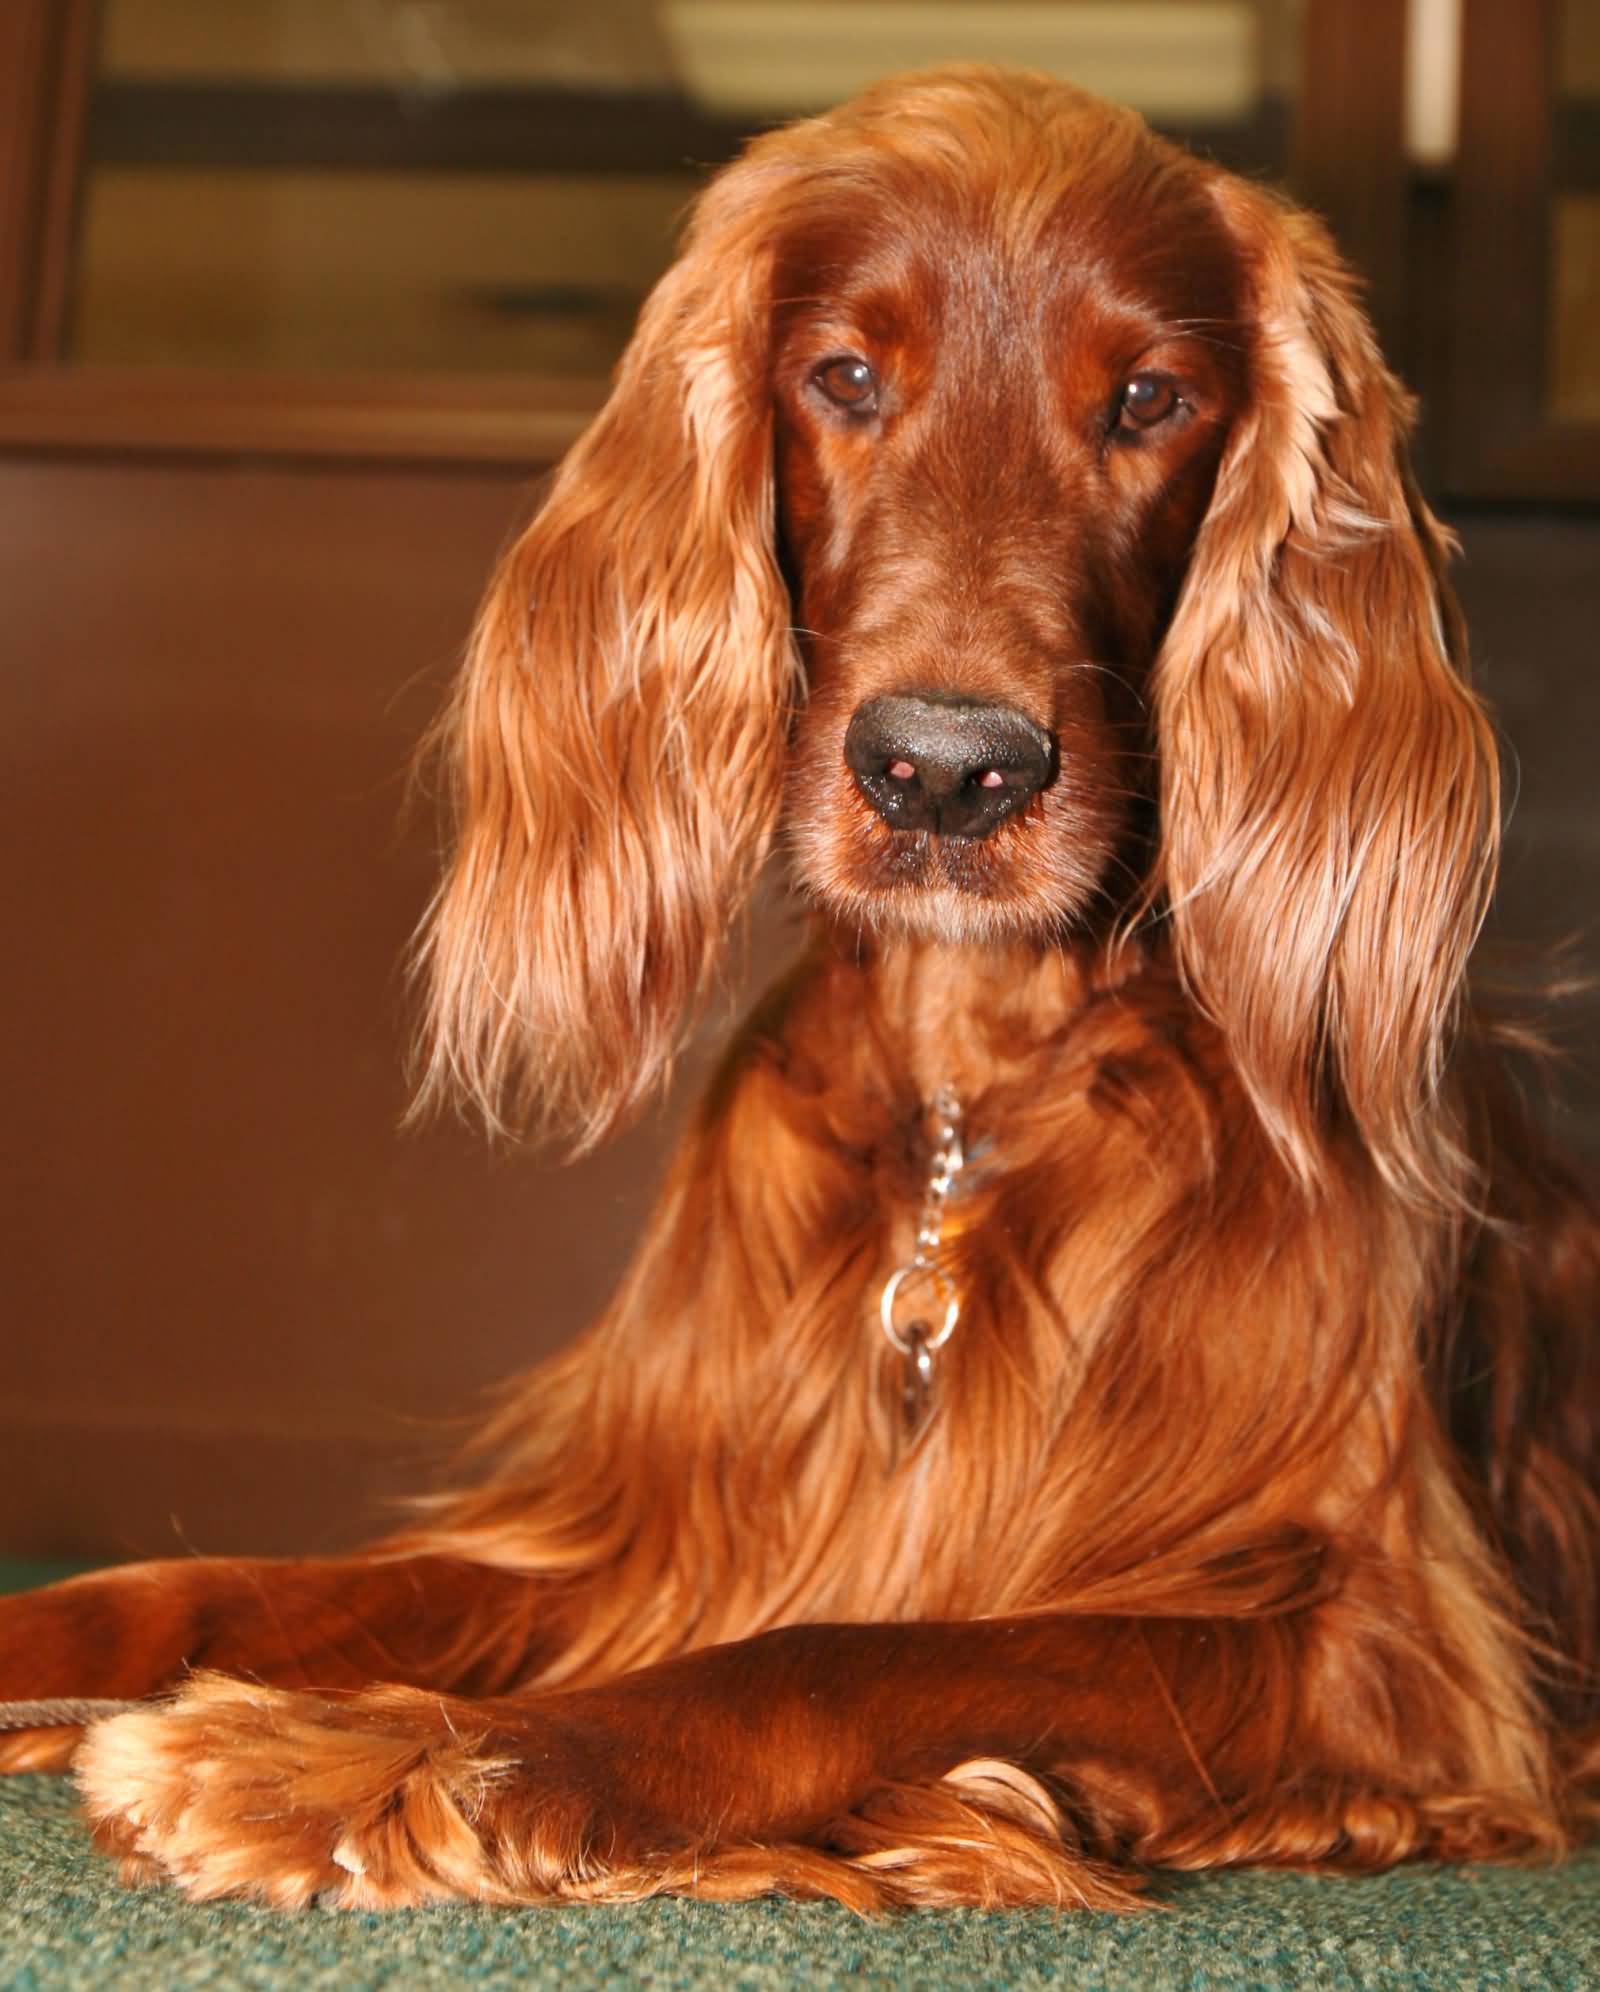 Long Hair Irish Setter Dog Sitting